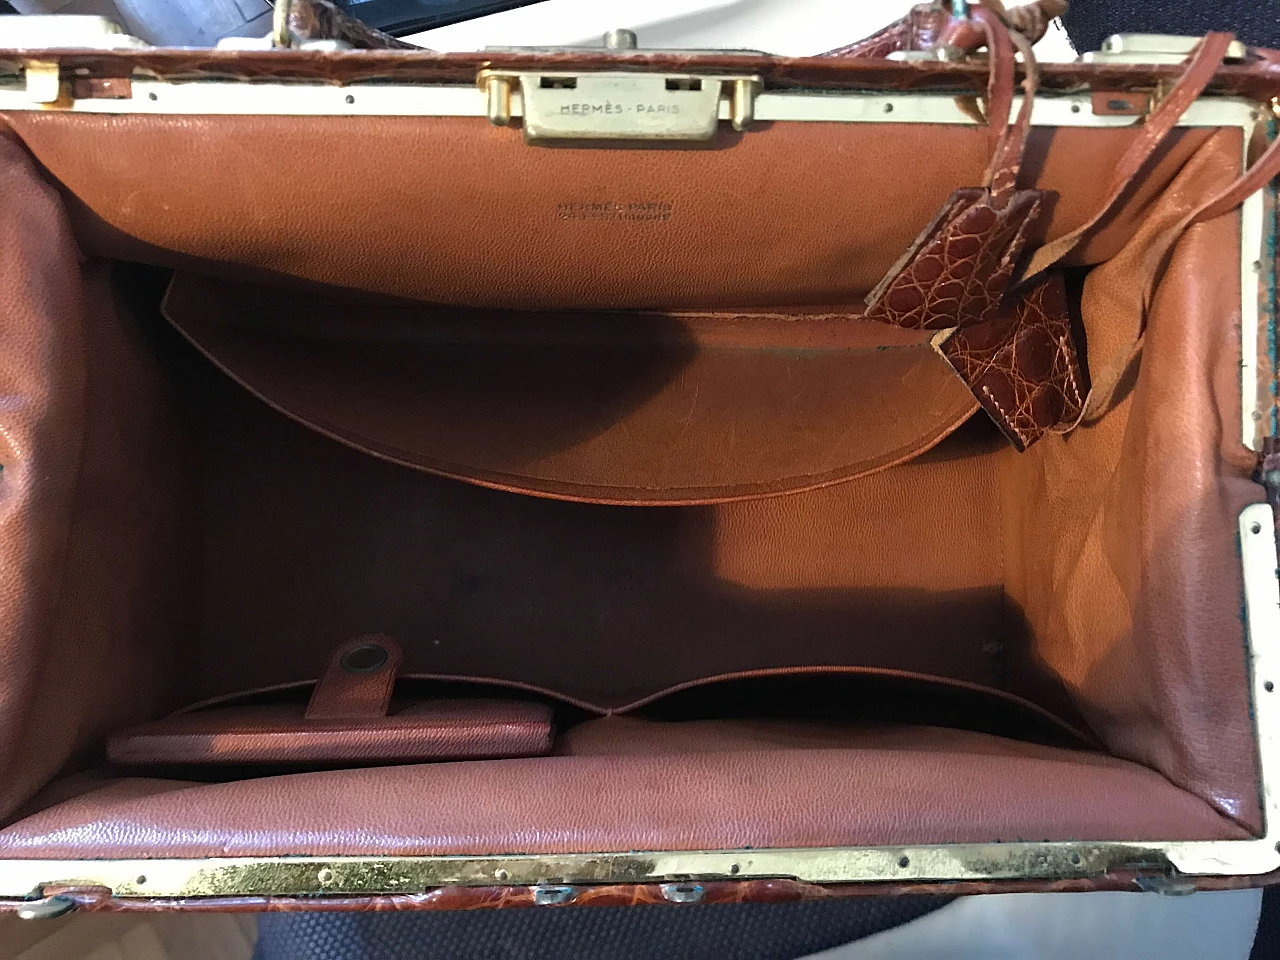 Travel bag Hermes SAC Madette, 1950s 1274650